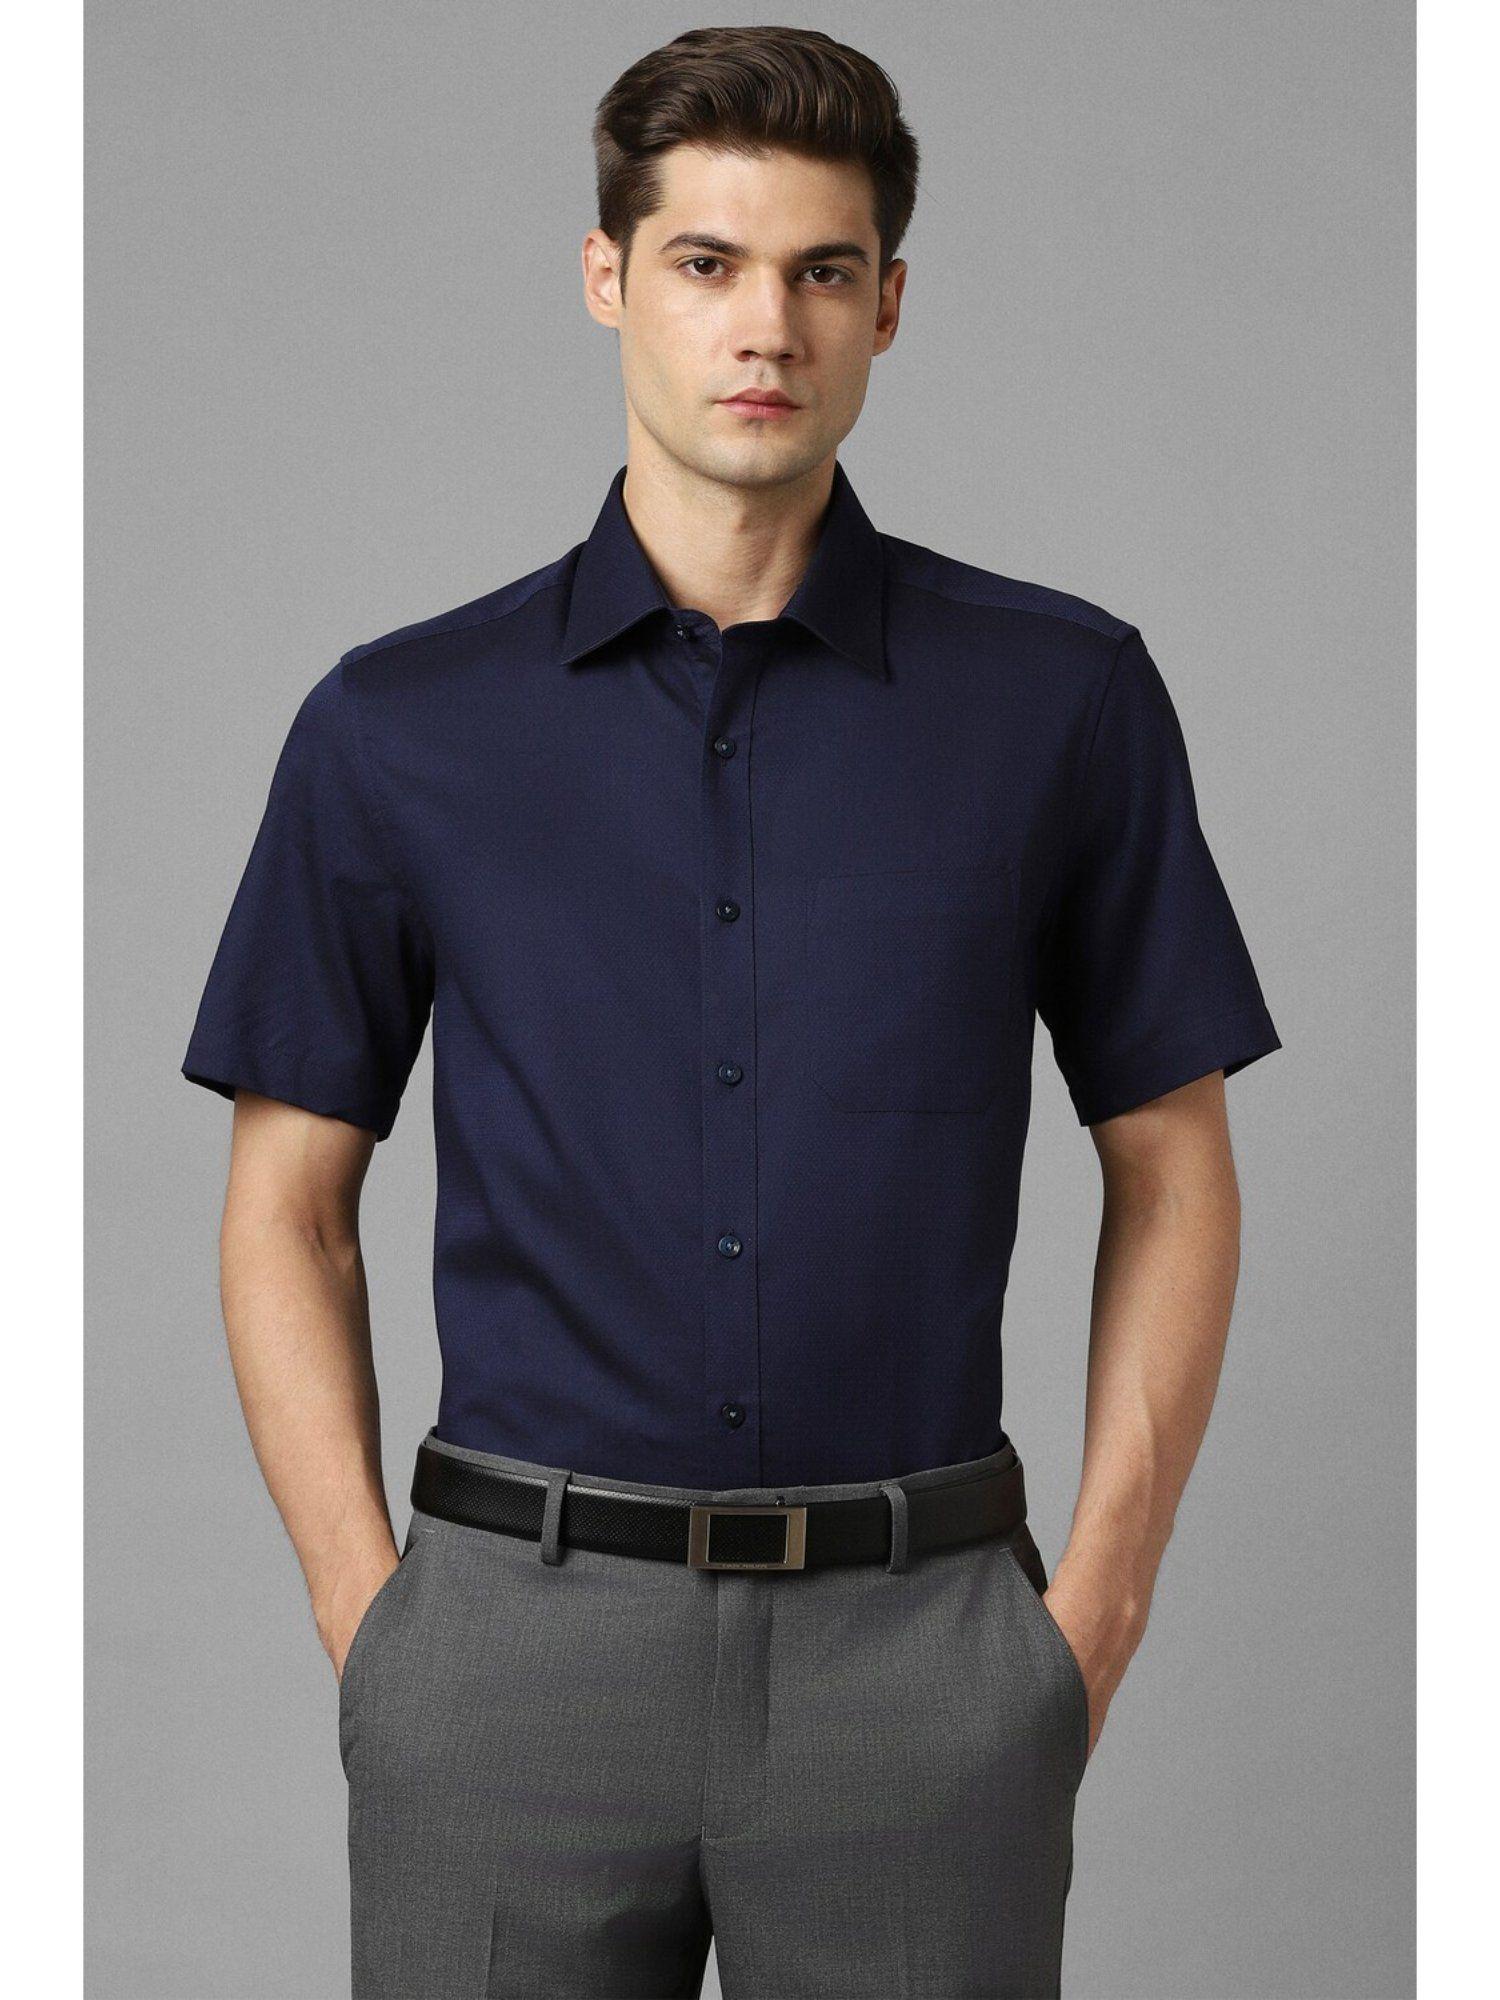 men navy blue classic fit textured half sleeves formal shirt